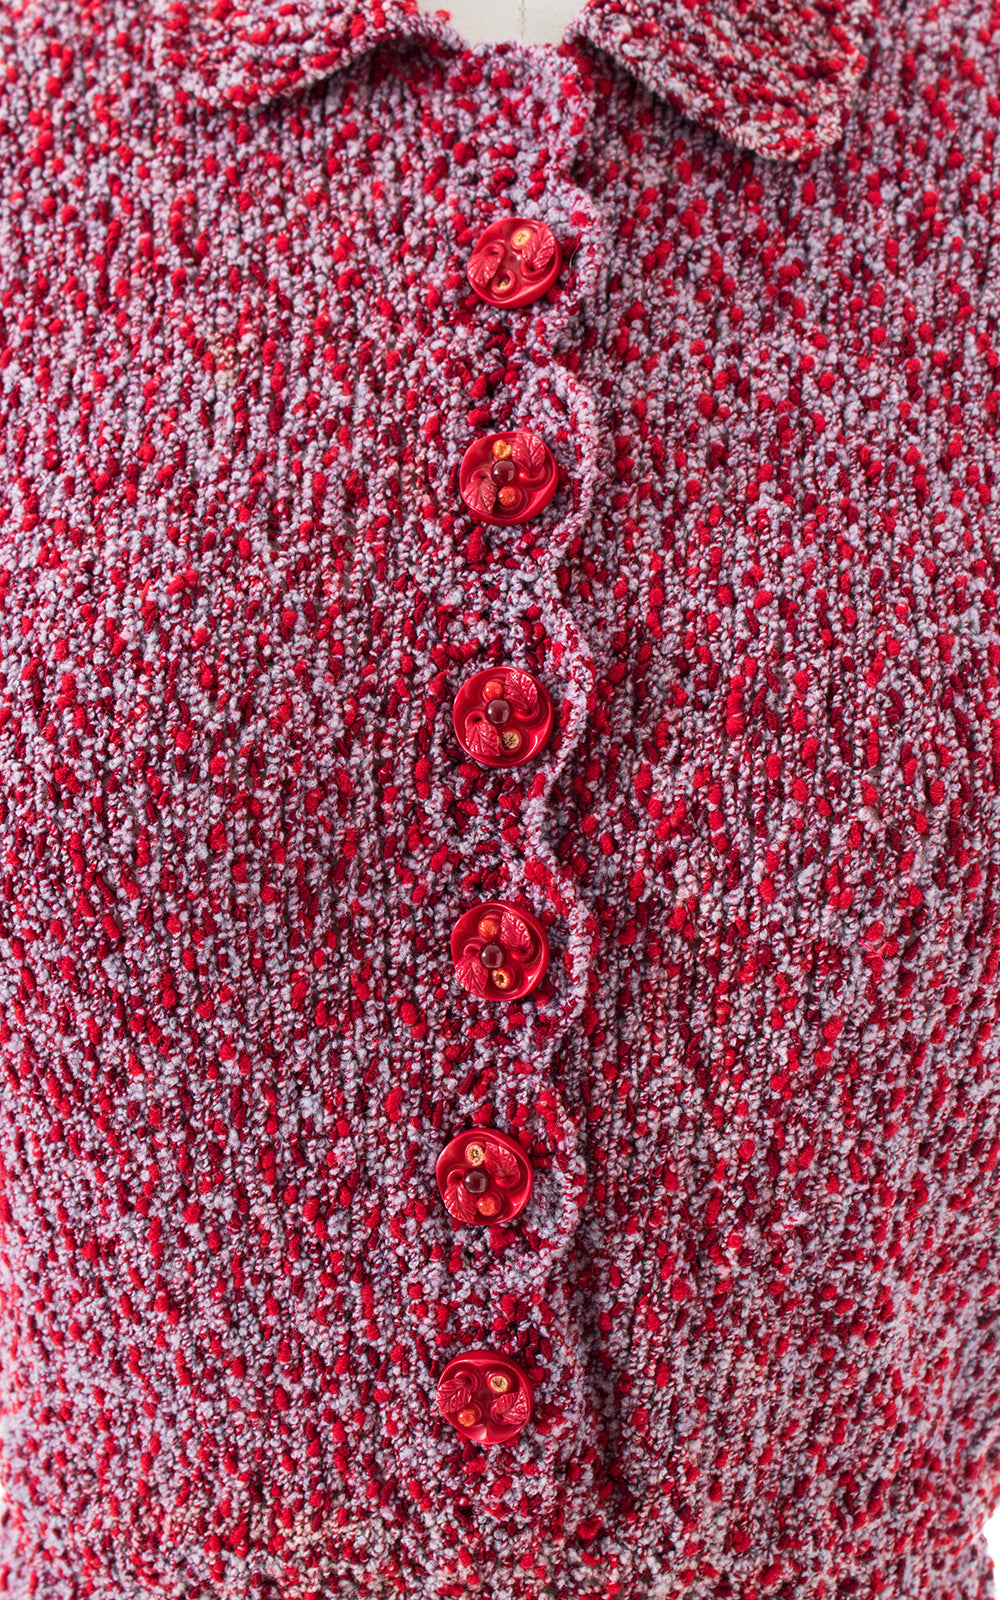 1940s Two Tone Flecked Knit Wool Dress